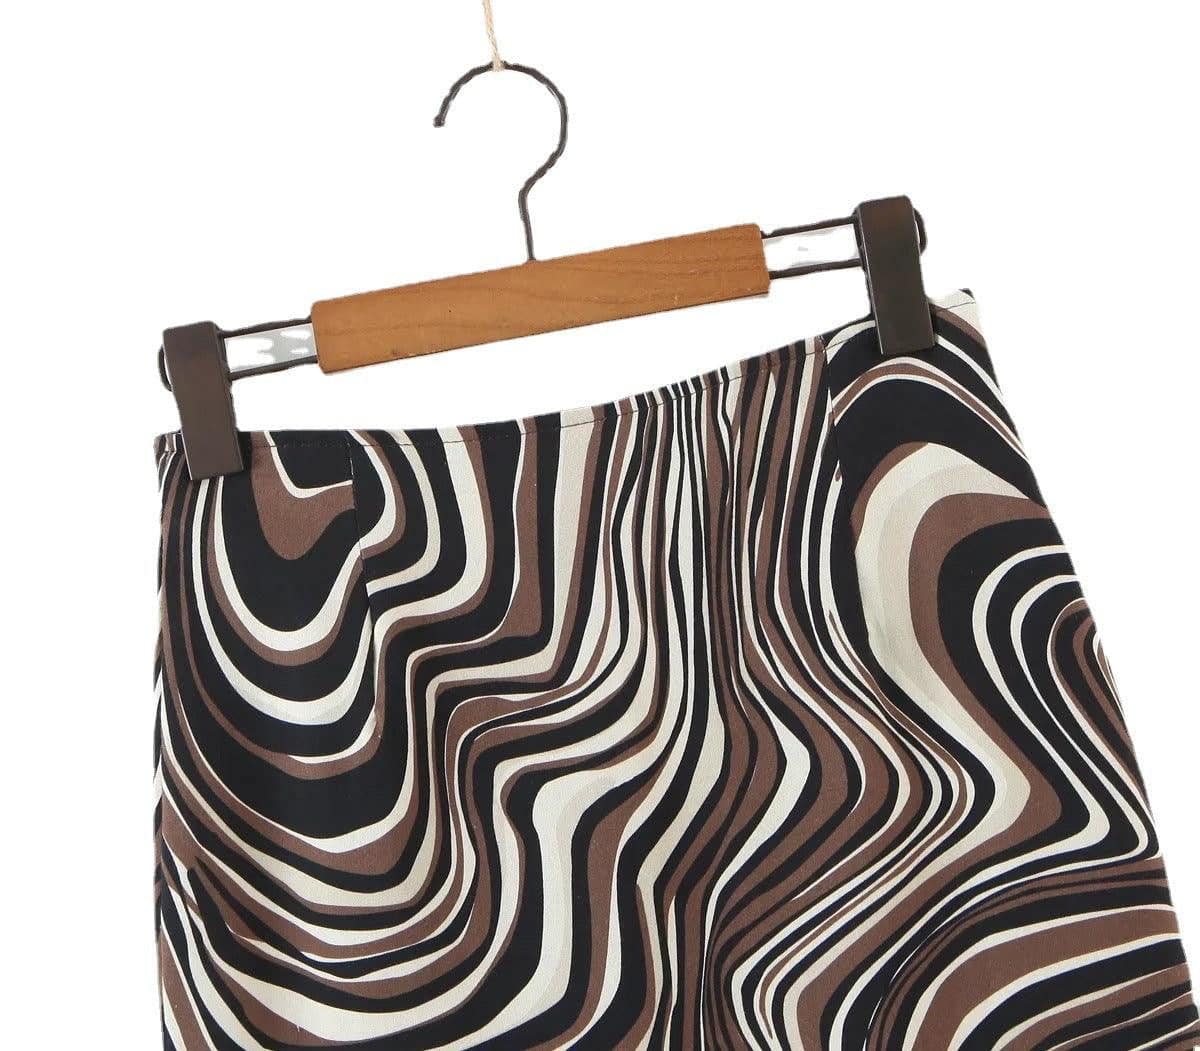 Alexandria Allover Fluid Print Skirt - Hot fashionista